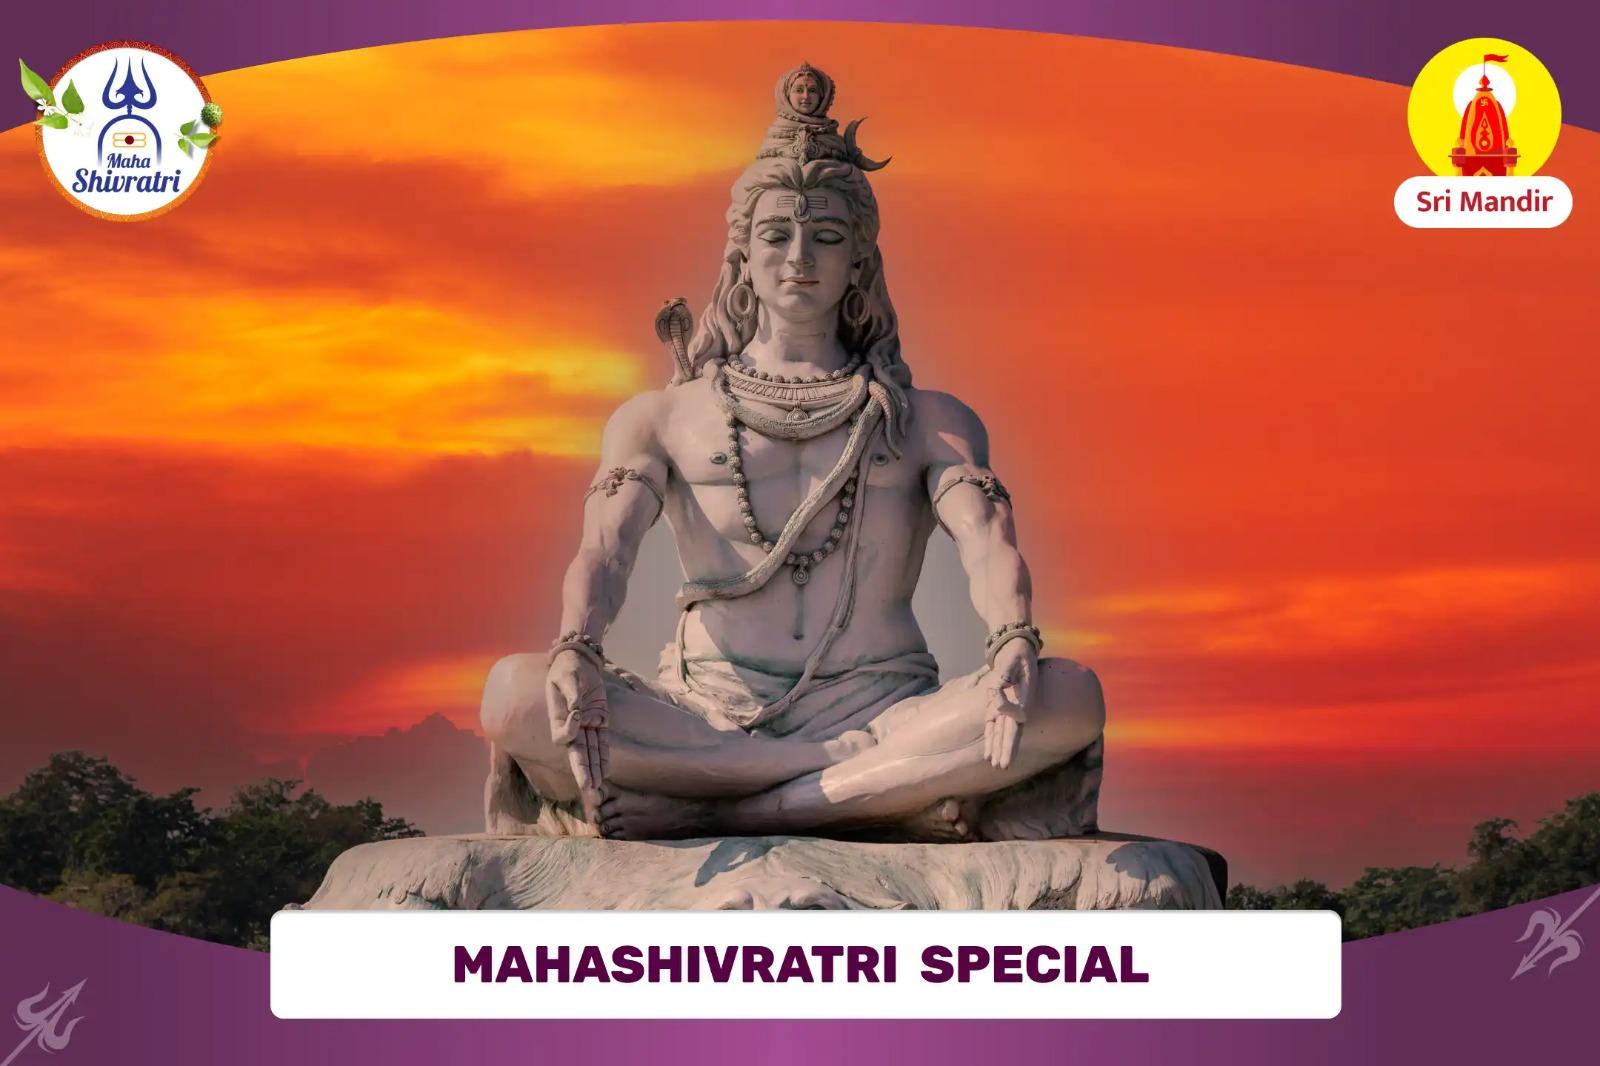 Mahashivratri Special Ekadasha Rudram Path and Yagya for Material Prosperity and Dissolution of Negativity